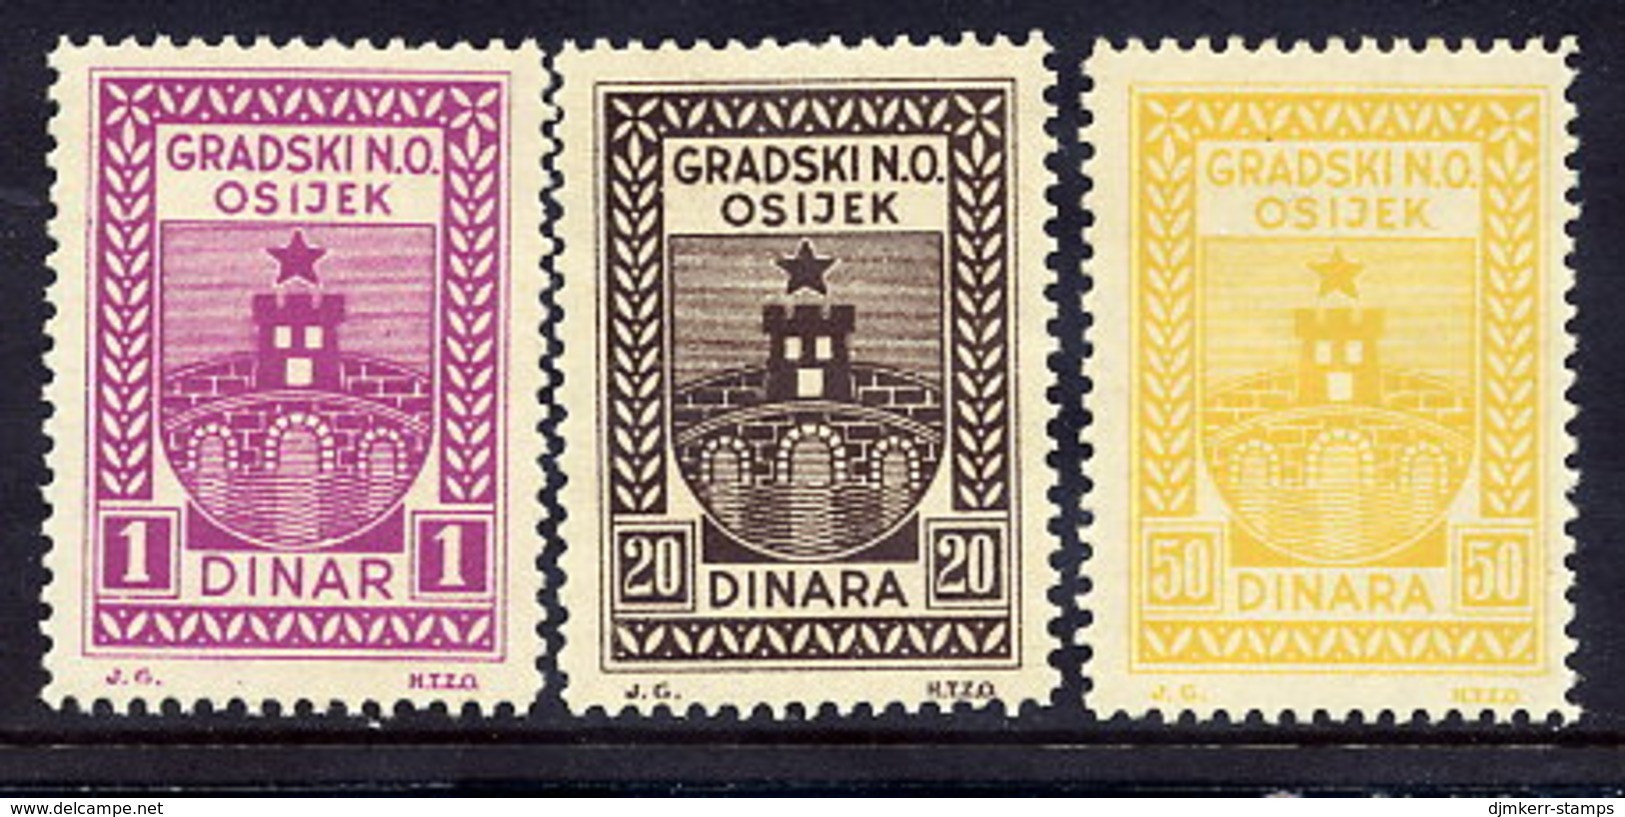 CROATIA Fiscal Stamps For Municipality Of Osijek 1, 20, 50 Dinar MNH / ** - Croatia